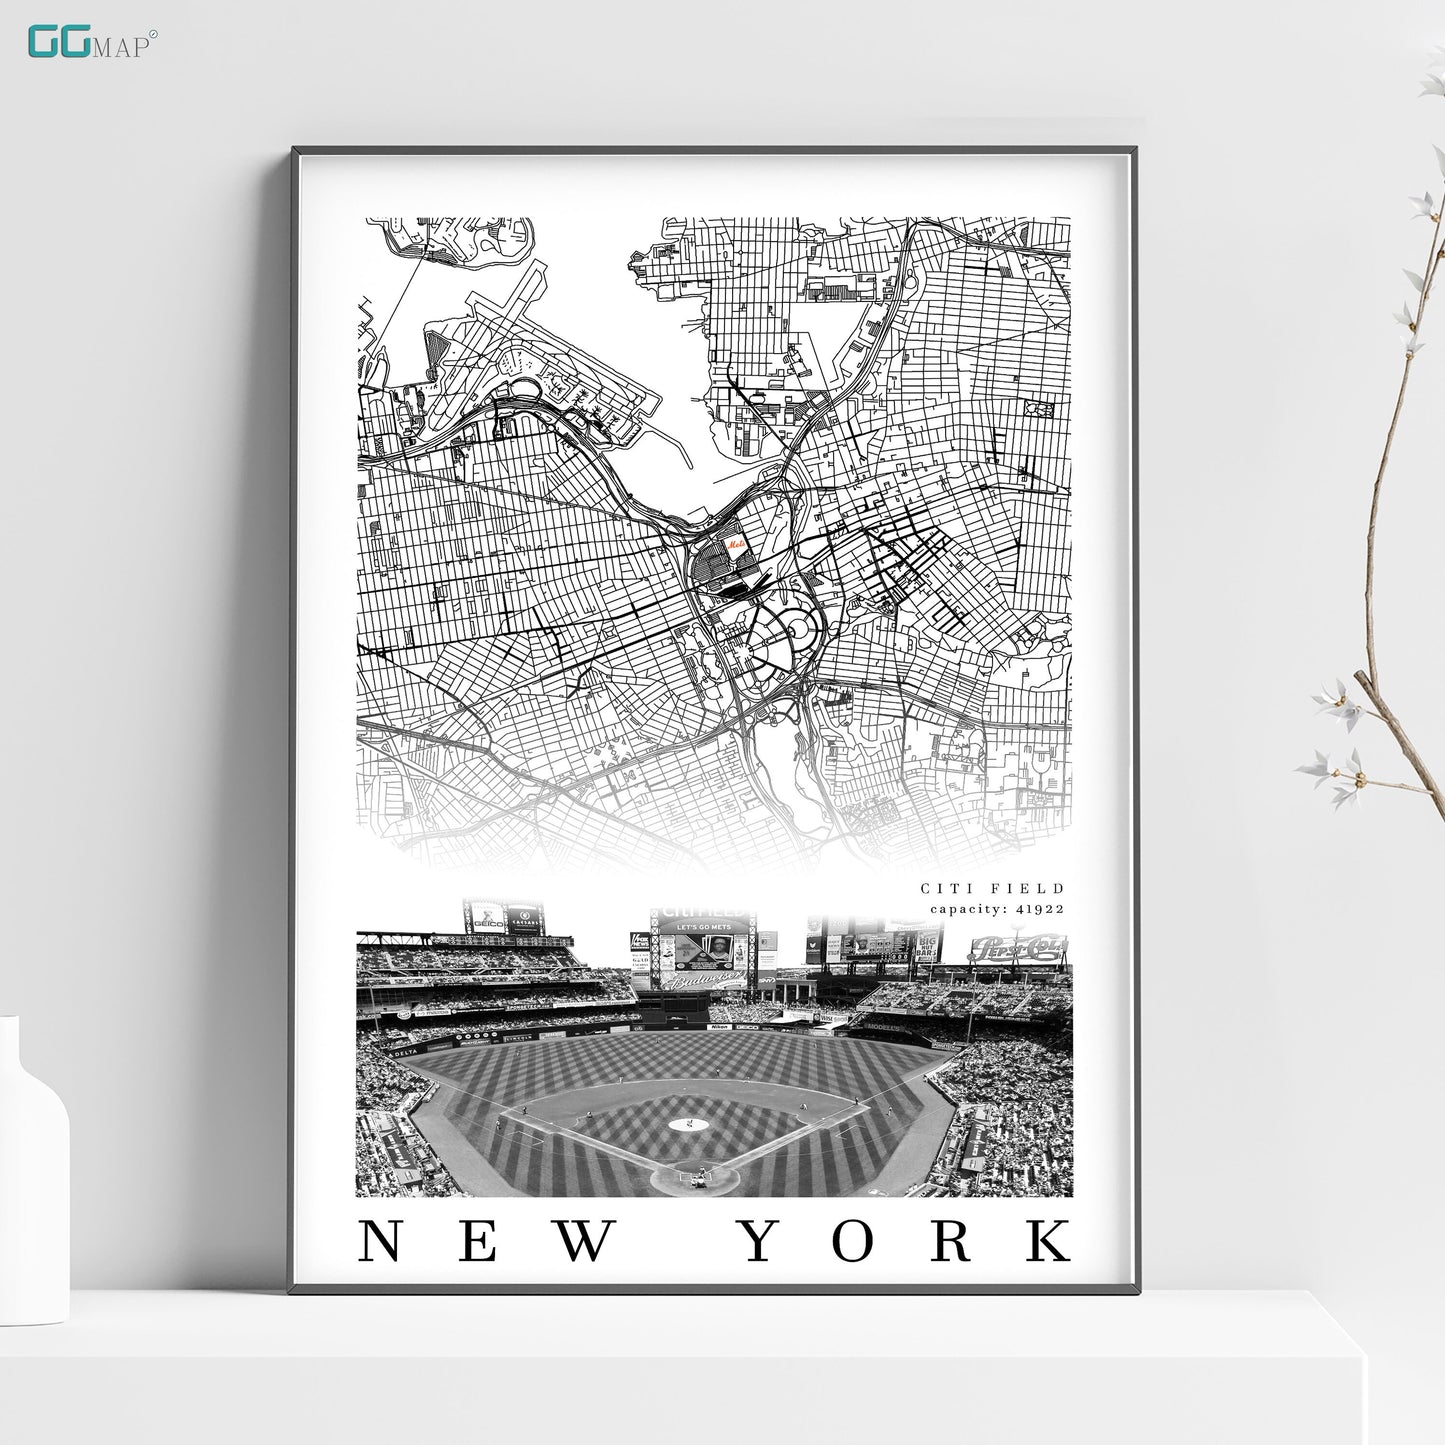 City map of NEW YORK - Home Decor New York - Citi Field wall decor - New York poster - New York Mets - Print map